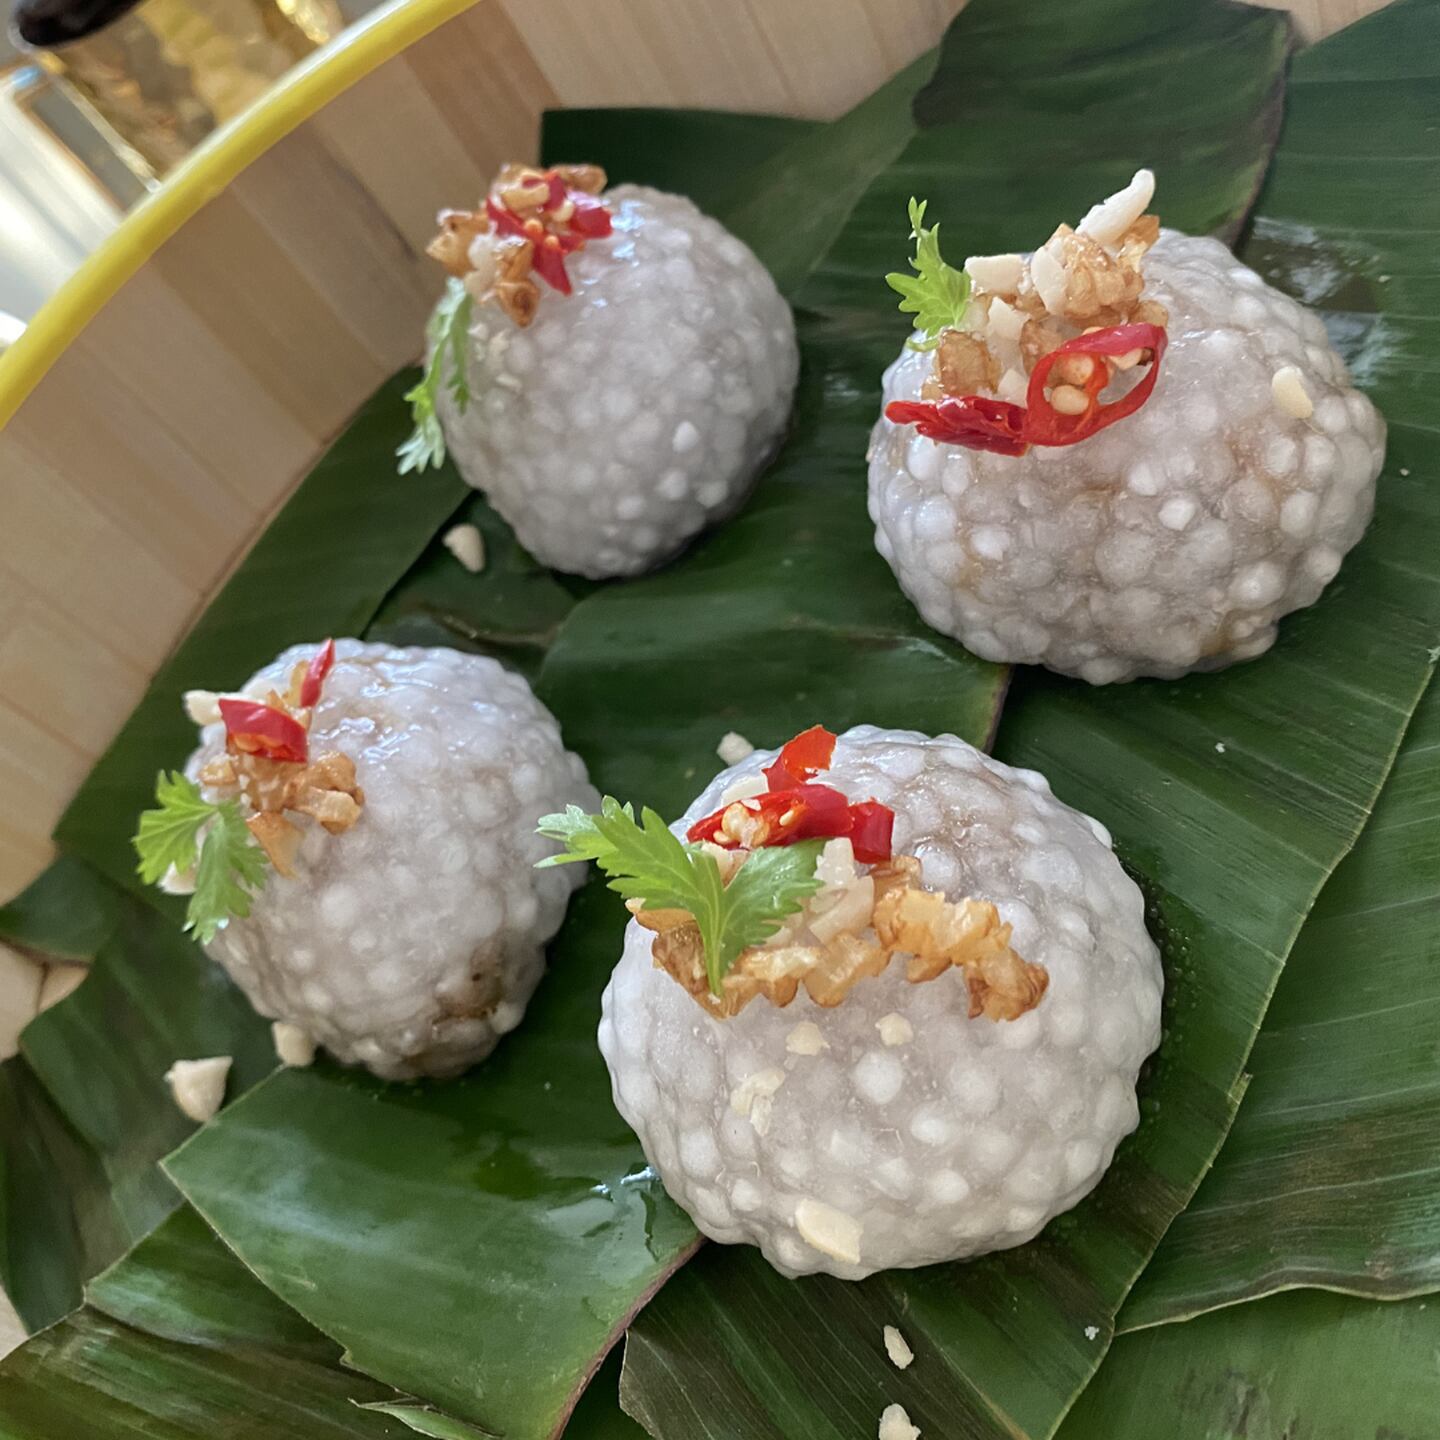 Thai tapioca dumplings with powdered jaggery and tapioca pearls. Photo: Dimple Khitri